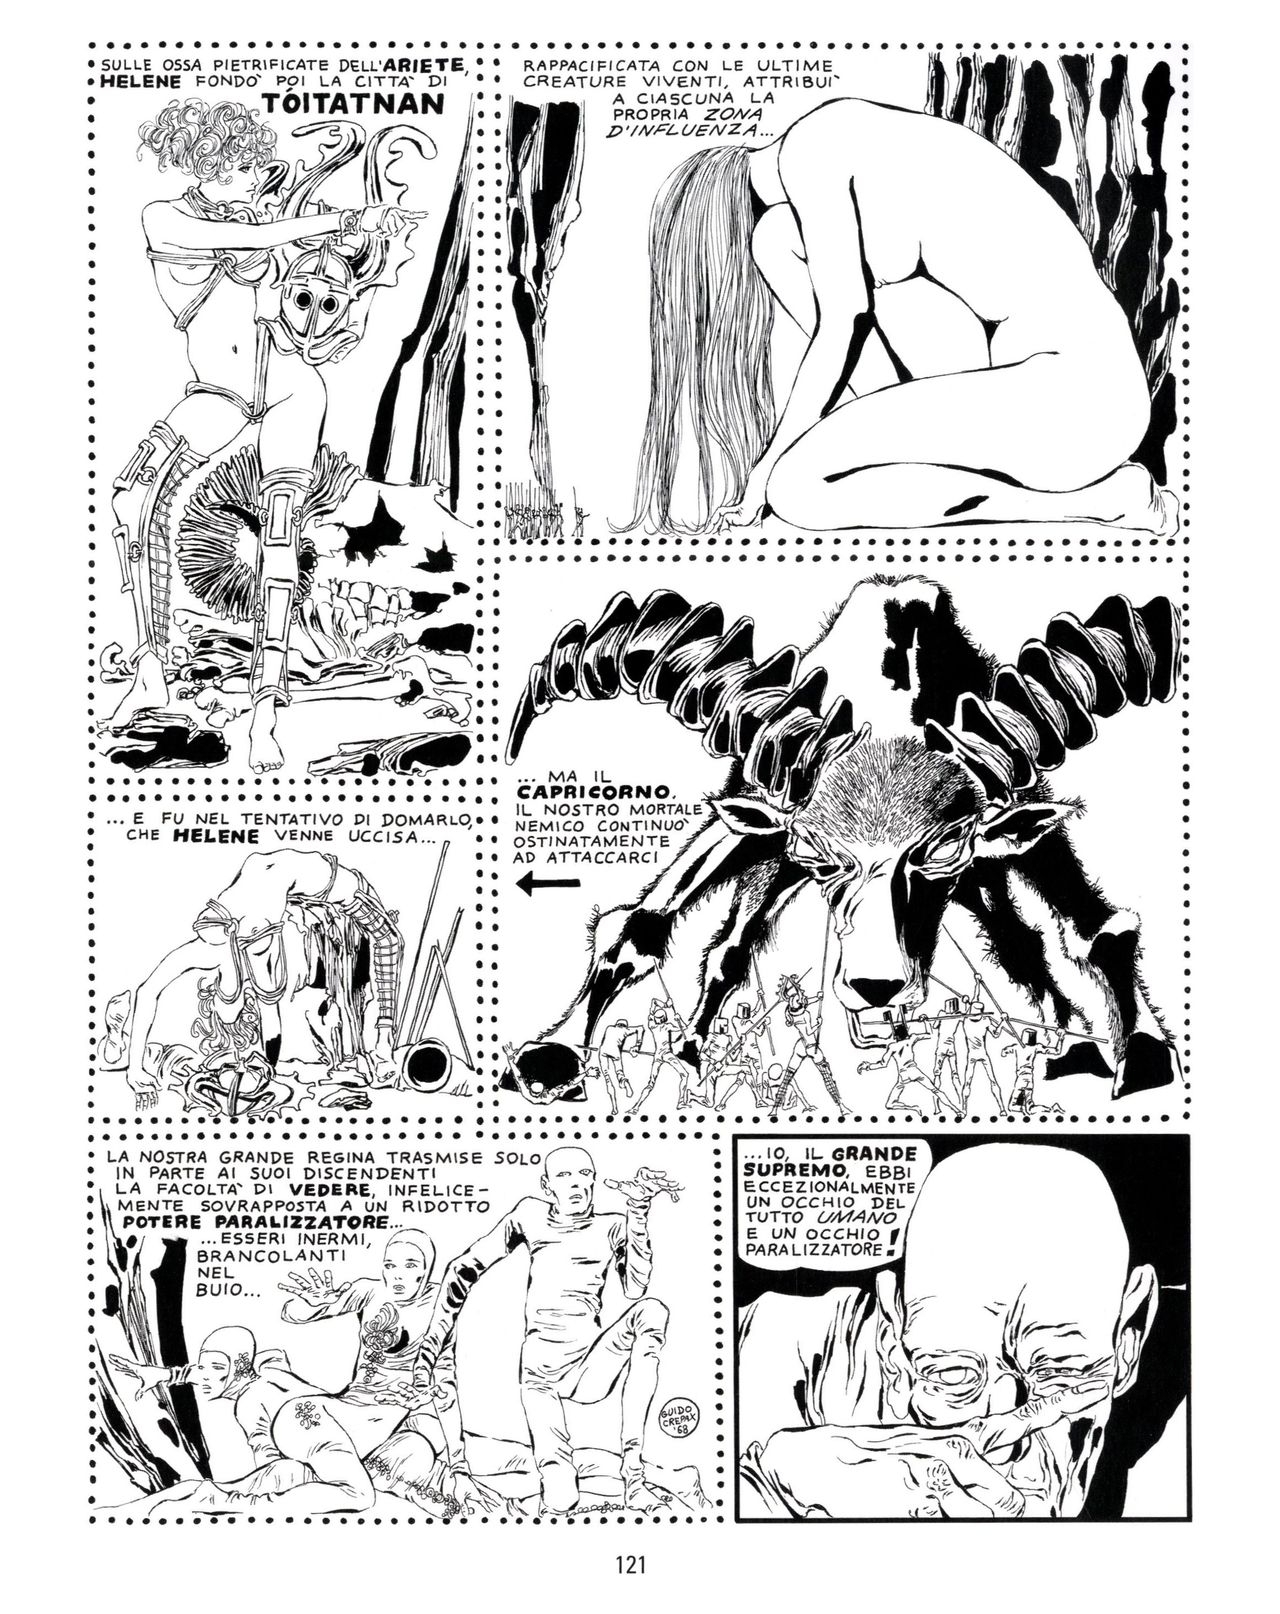 [Guido Crepax] Erotica Fumetti #25 : L'ascesa dei sotterranei : I cavalieri ciechi [Italian] 122